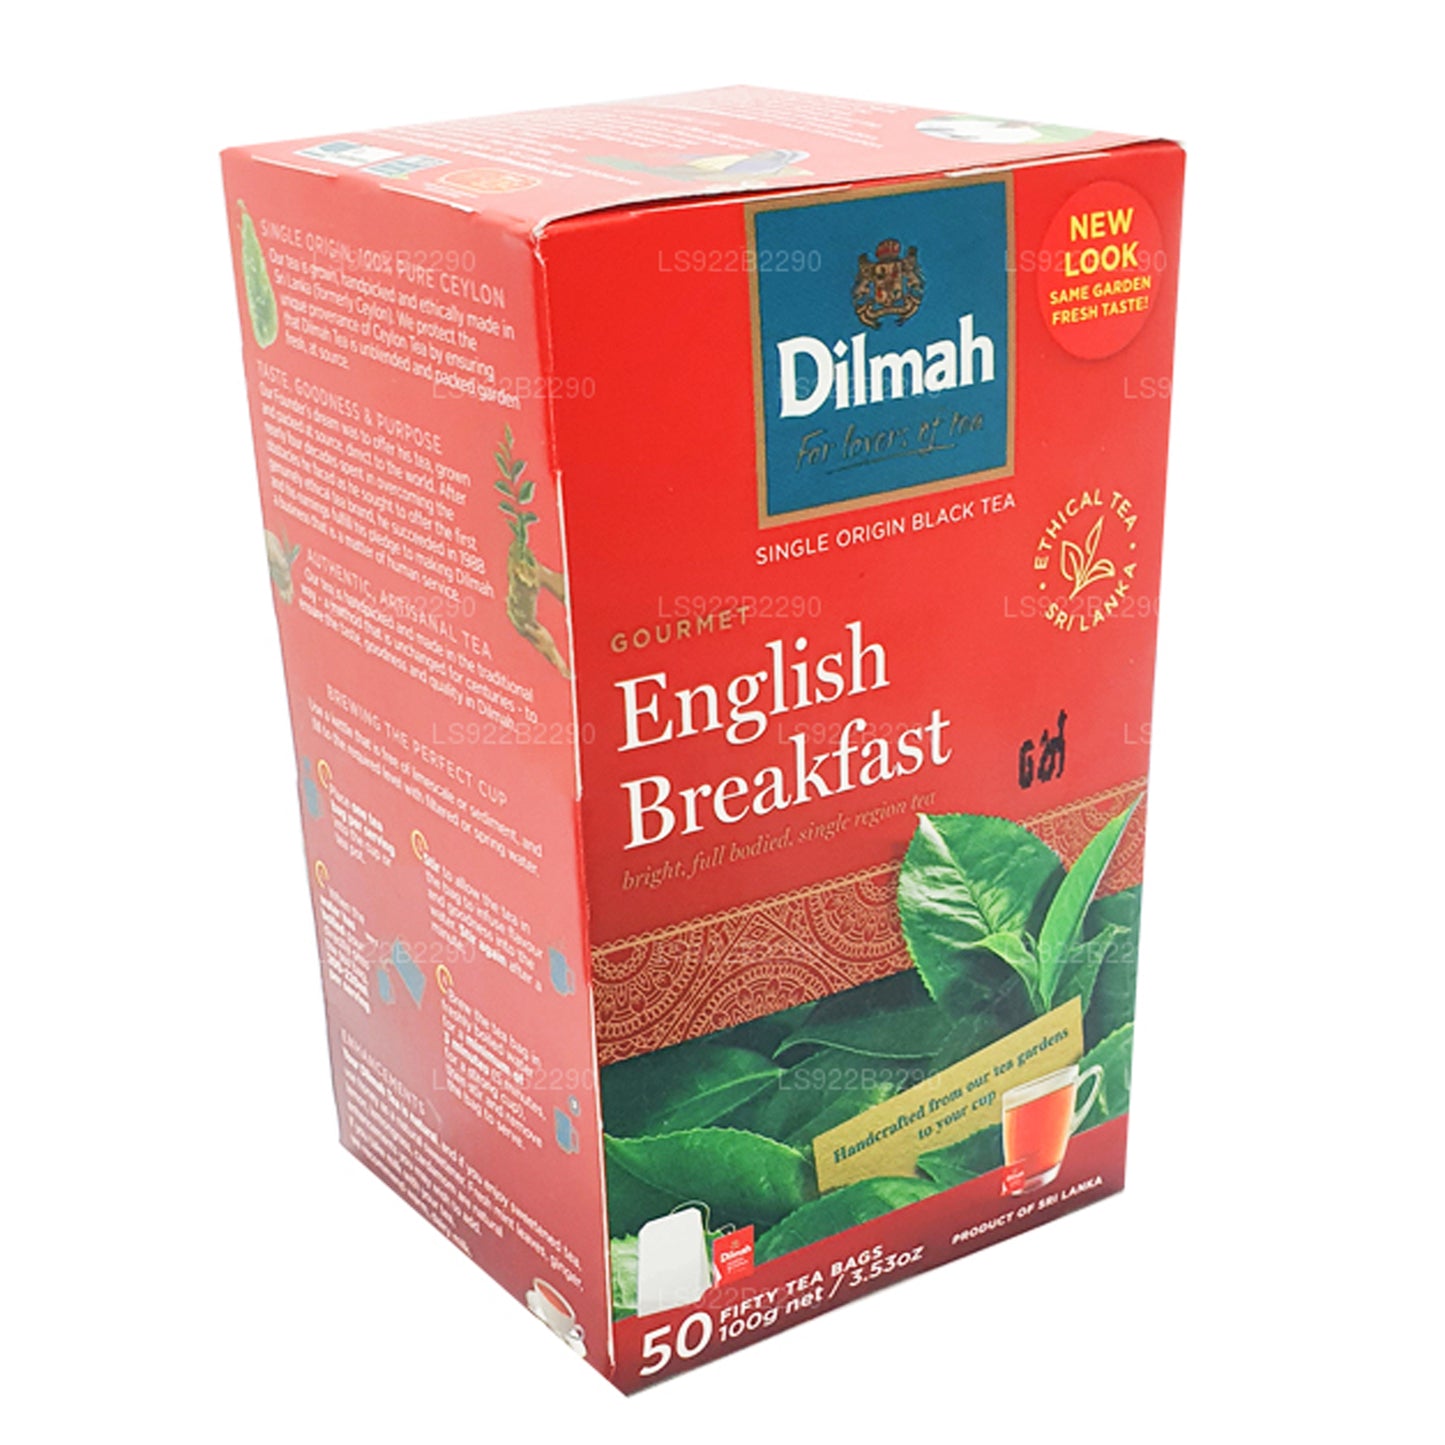 Dilmah angielska herbata śniadaniowa, 50 torebek herbaty (100g)